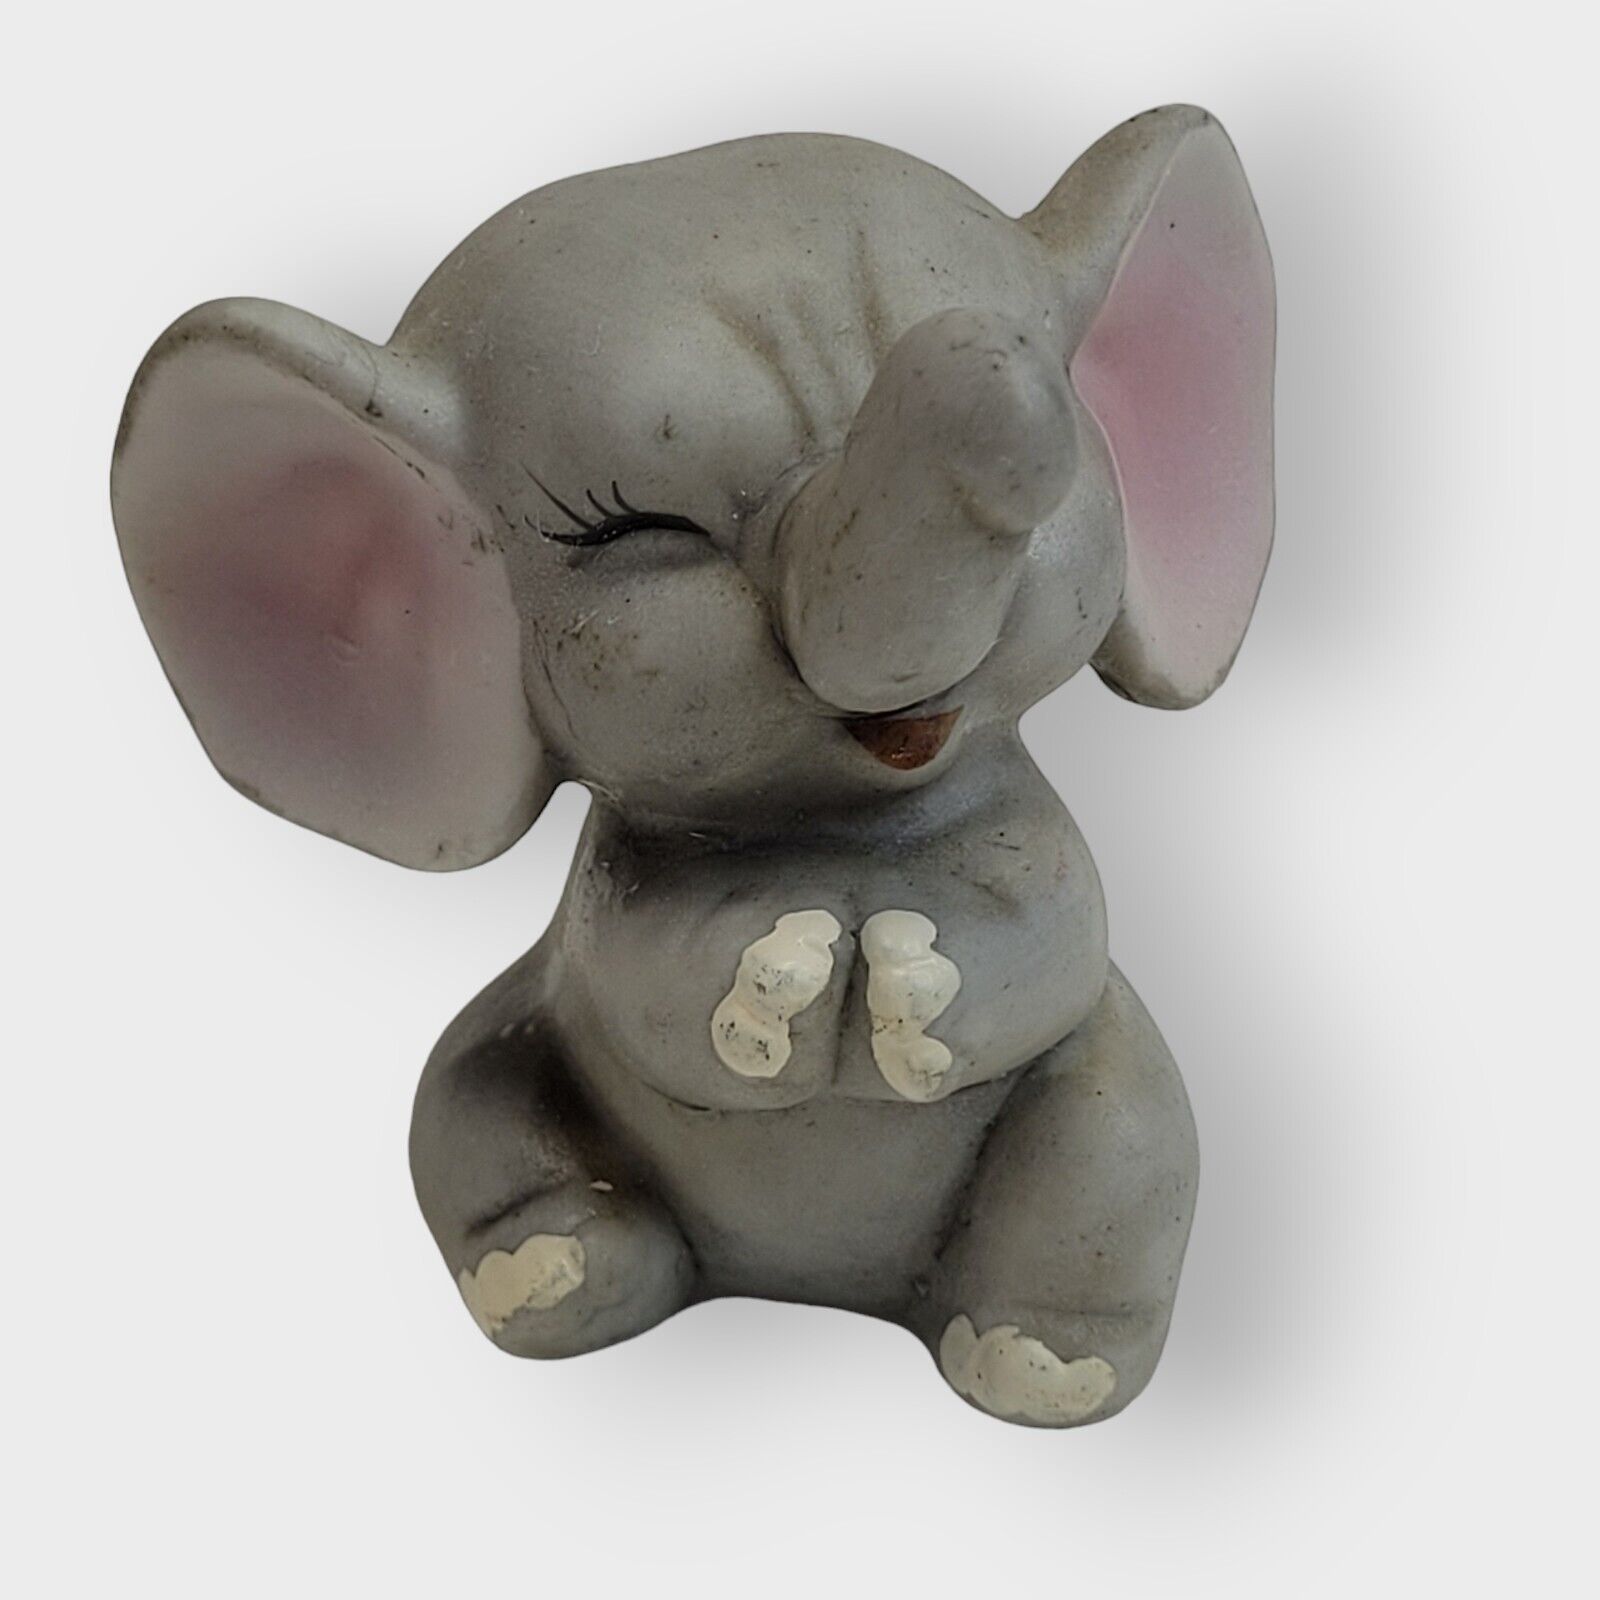 Vintage Enesco Baby Elephant Figurine Gray Pink Ceramic Decoration Trunk Up